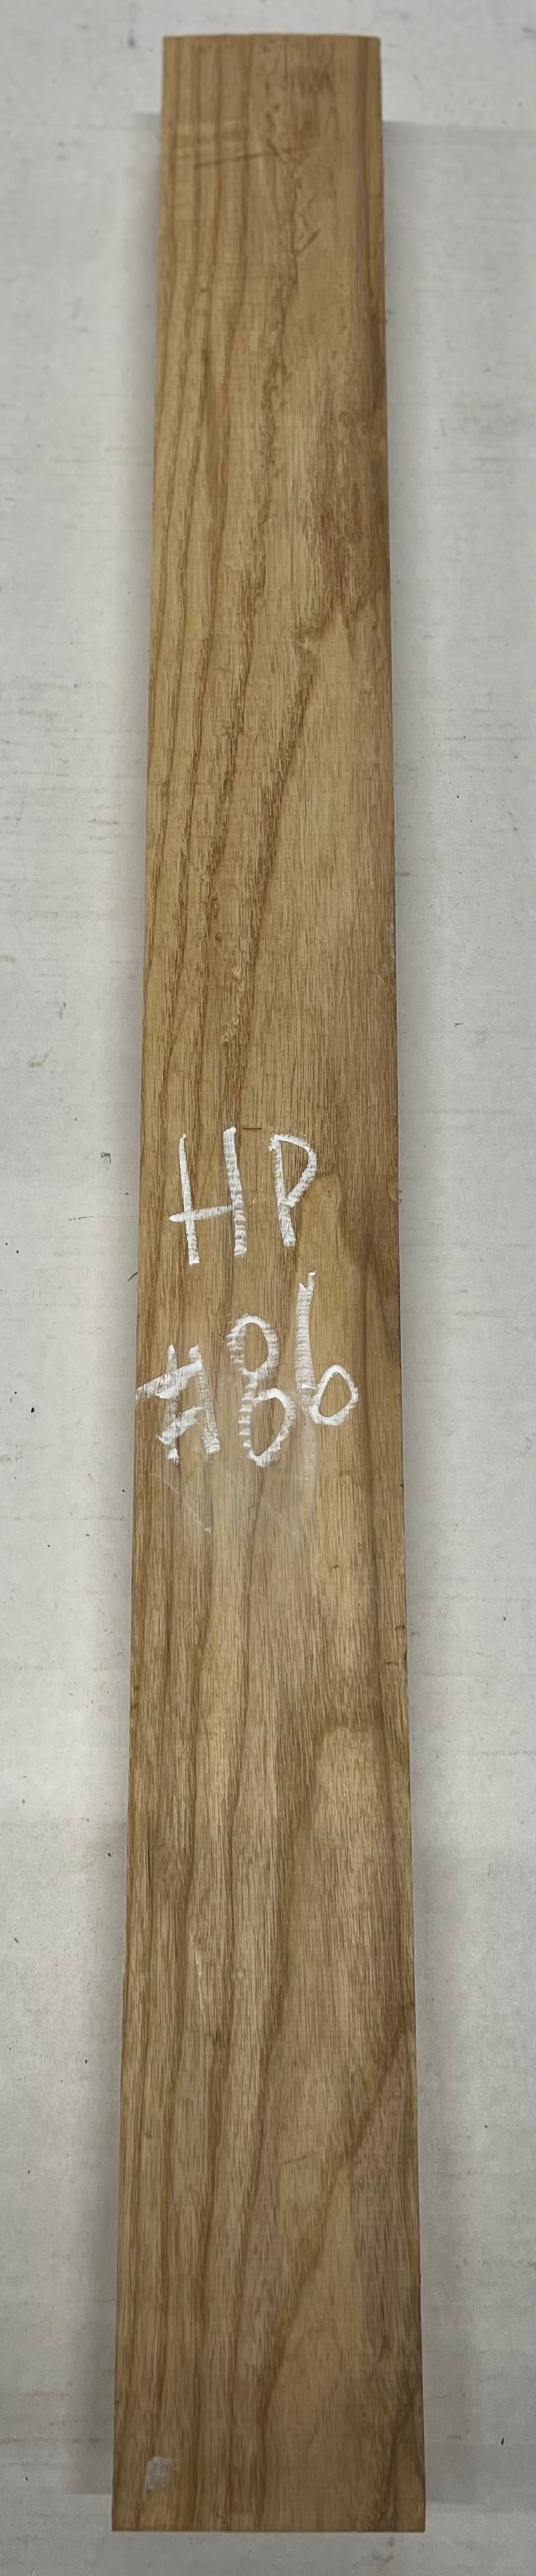 Honduran Mahogany Lumber Board Square Wood Blank 37&quot;x7&quot;x1-1/2&quot; 